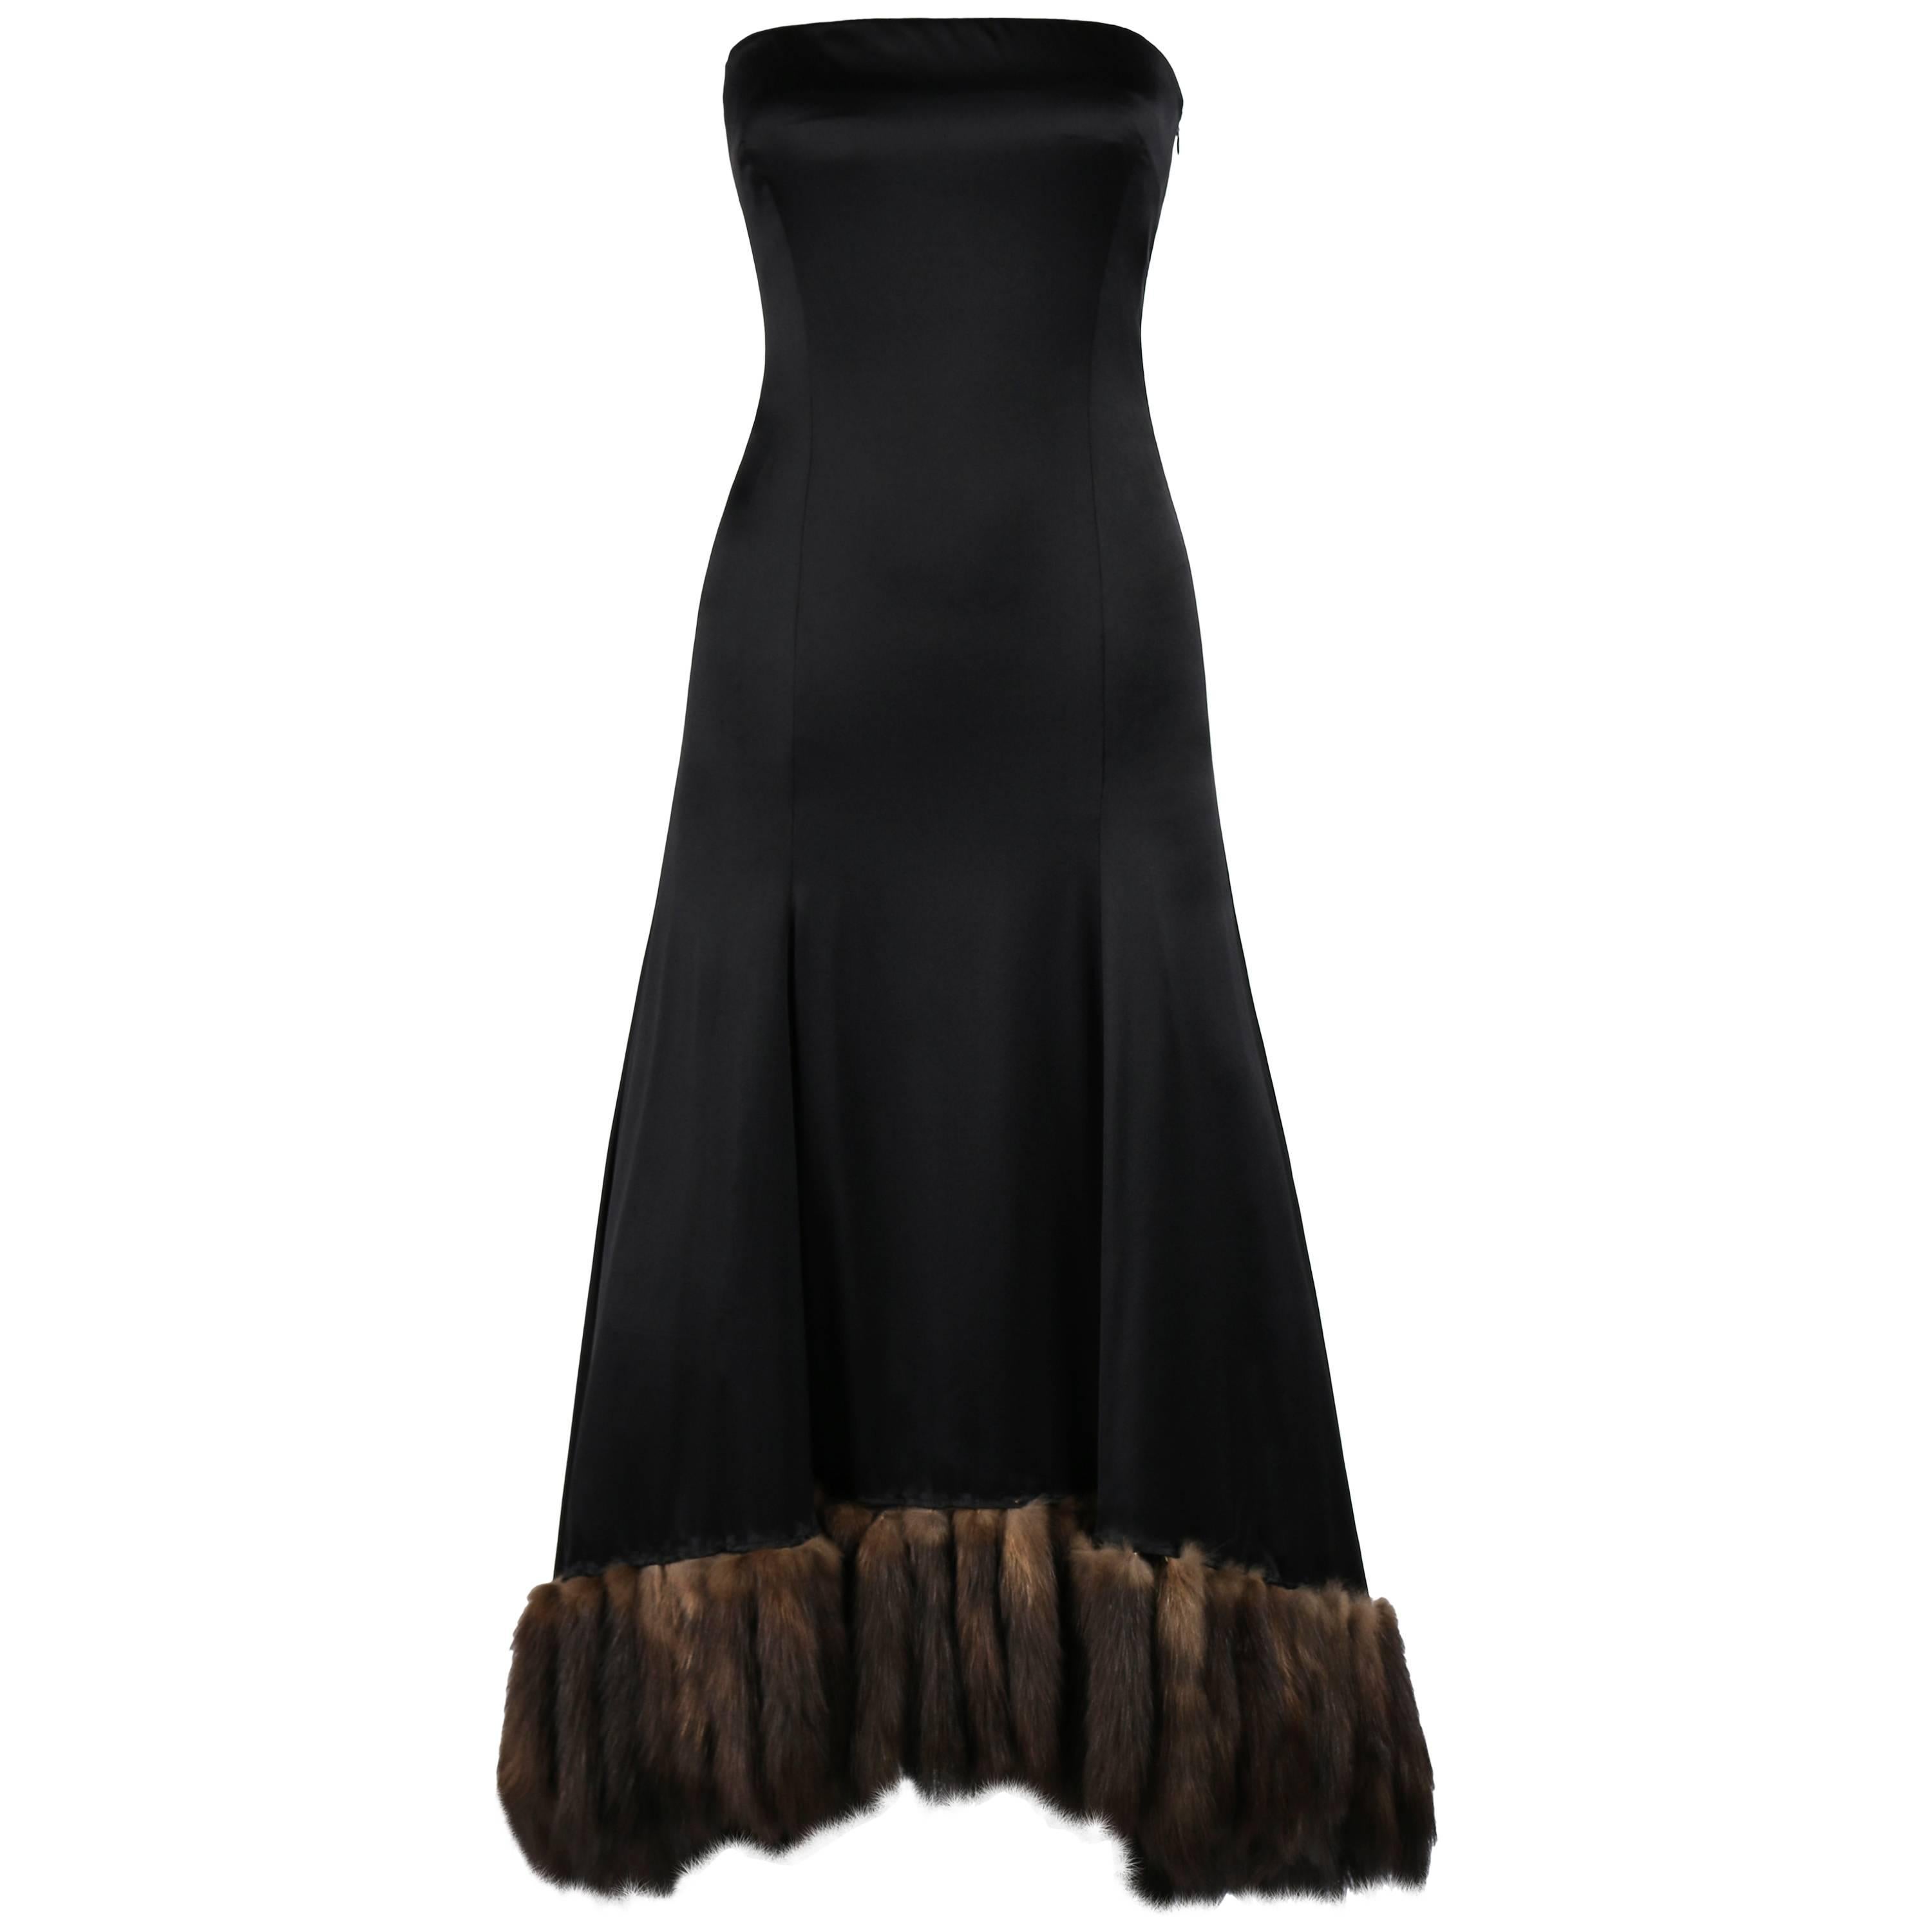 J MENDEL Paris Black Satin Ball Gown Sable Fur Tail Trim Evening Dress XS = 0/2